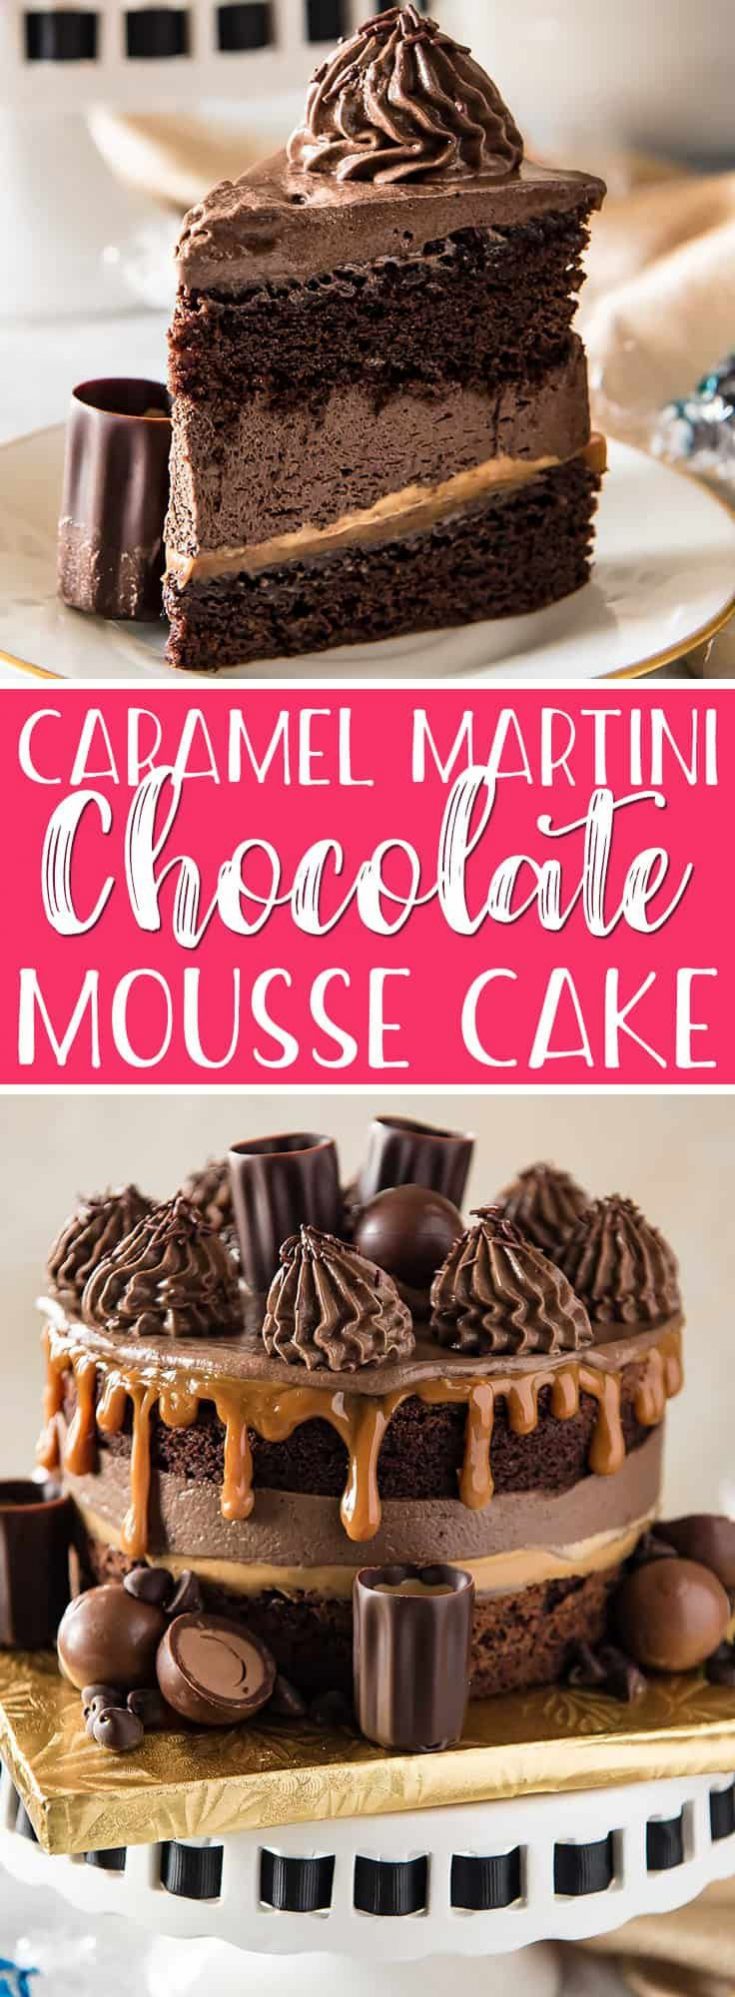 caramel martini chocolate mousse cake